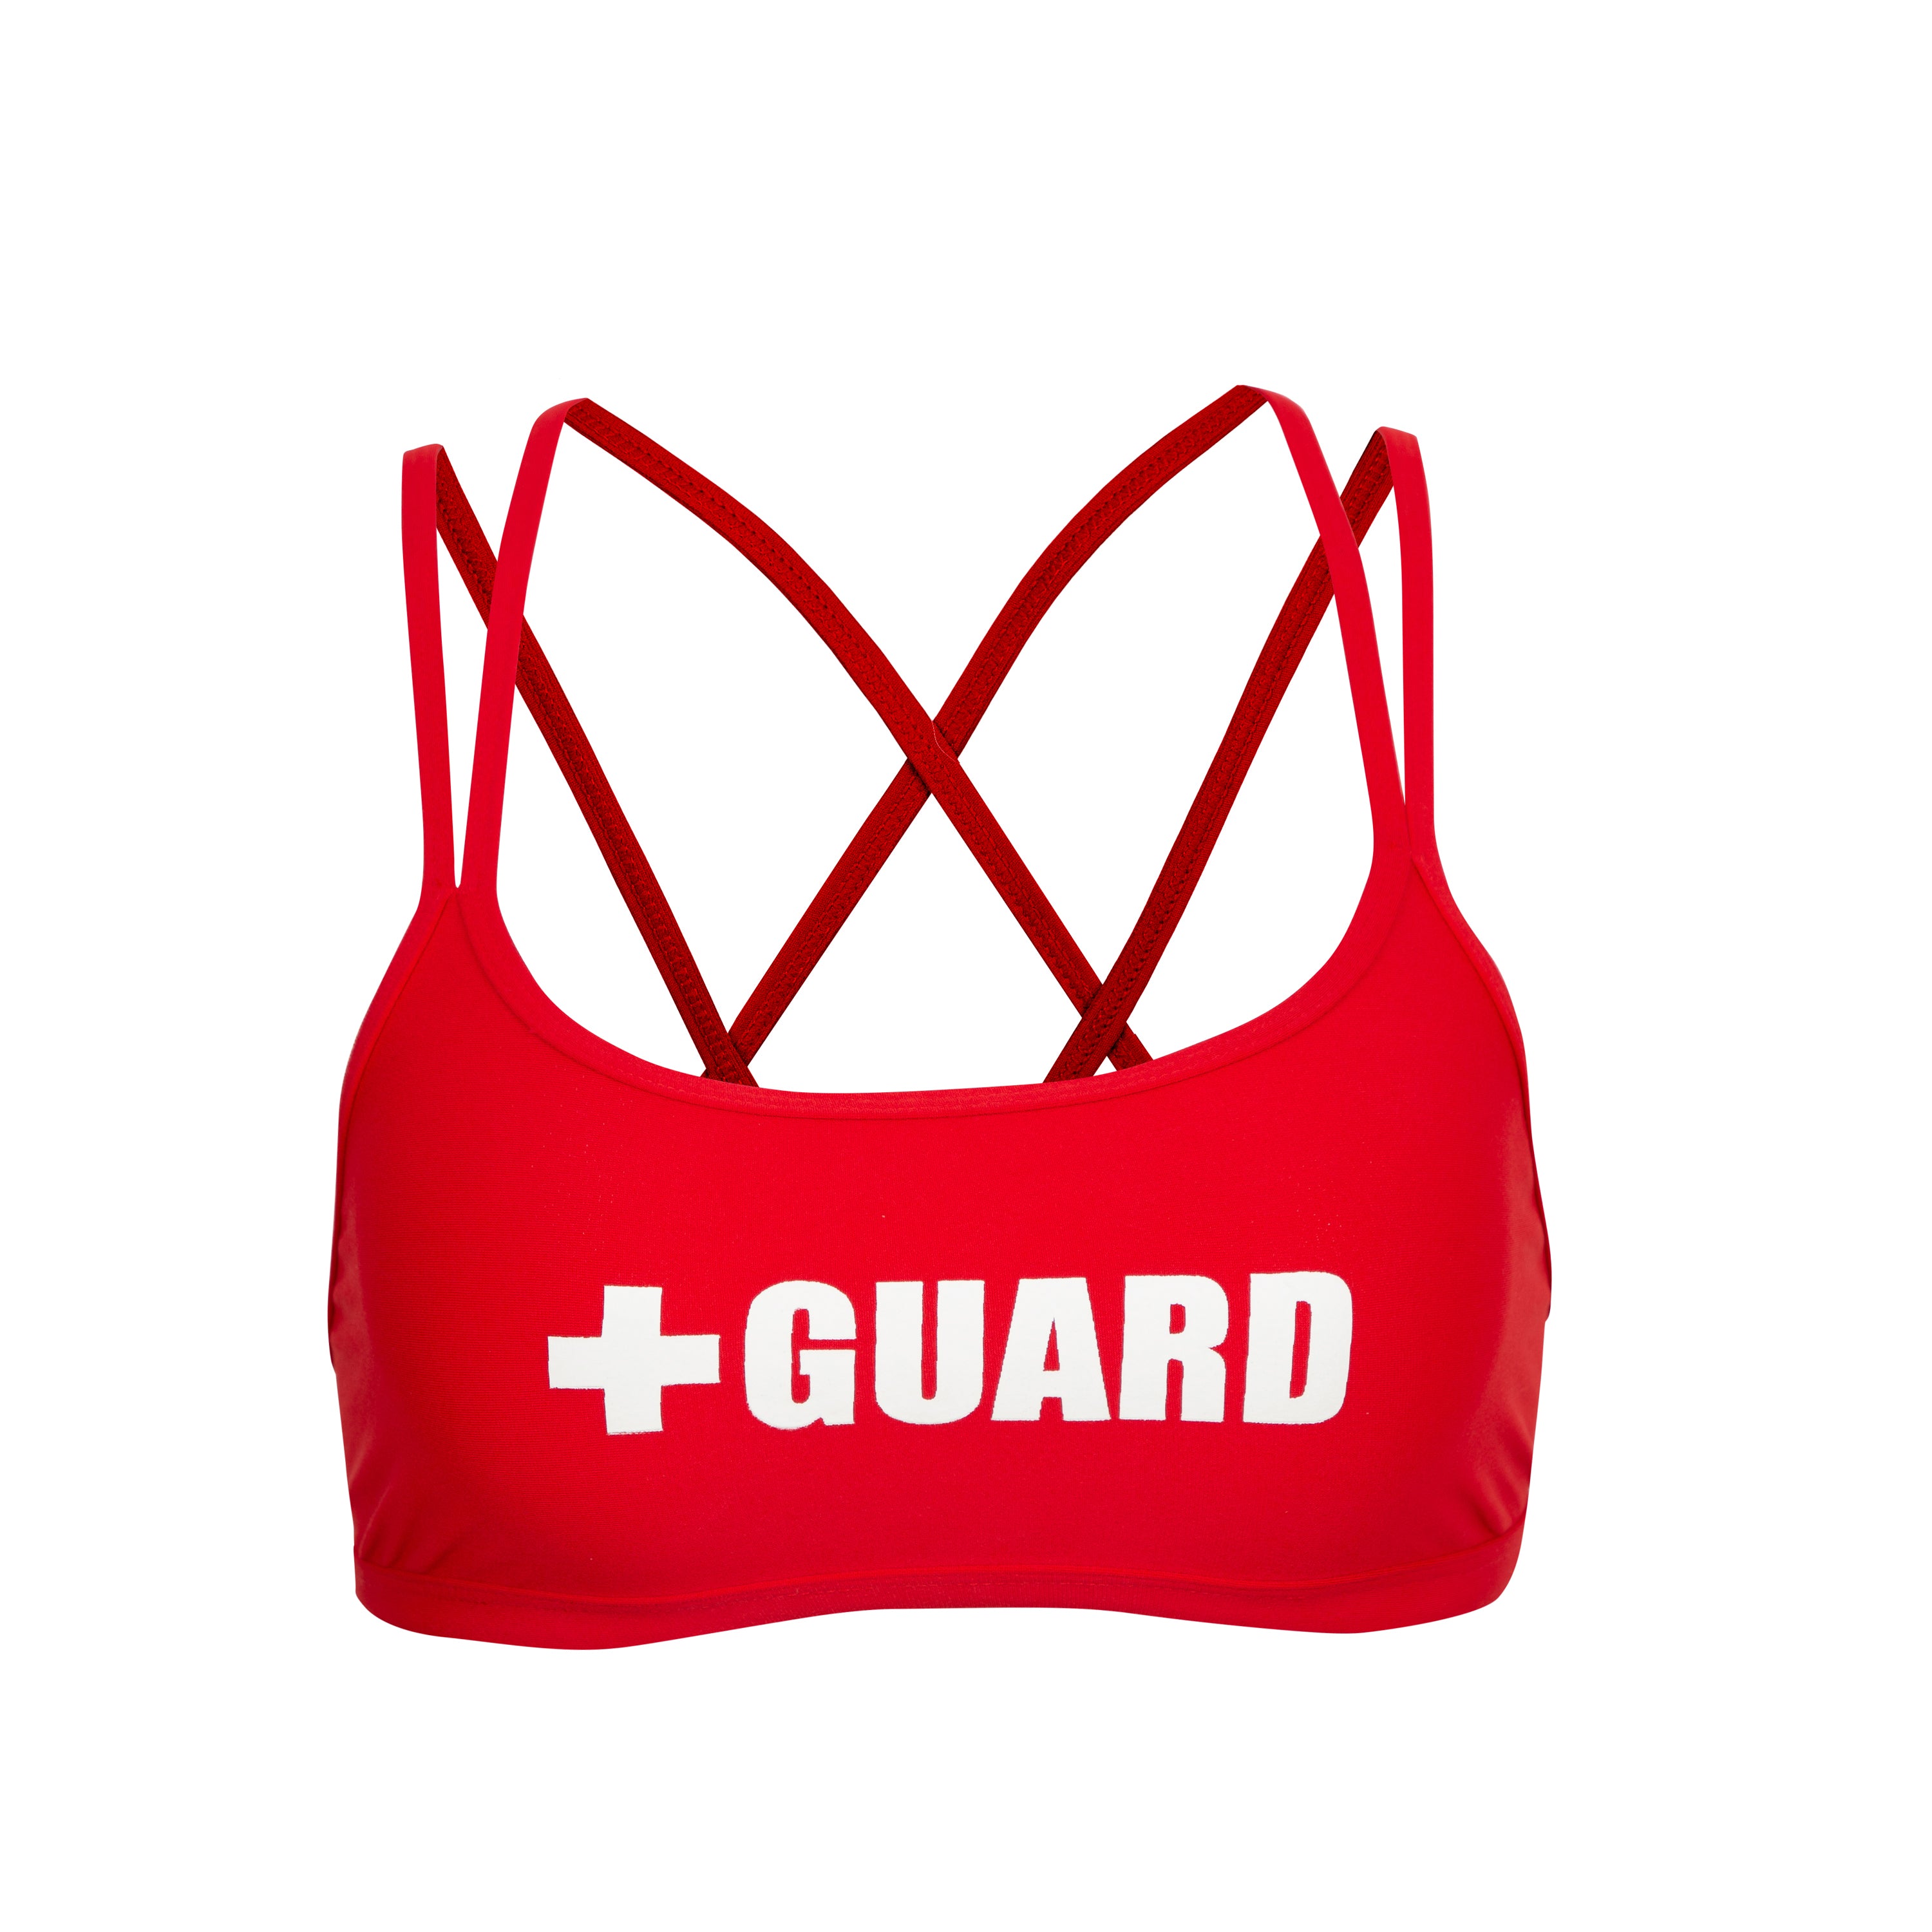 Lifeguard Swimsuit Double Cross Top - BLARIX